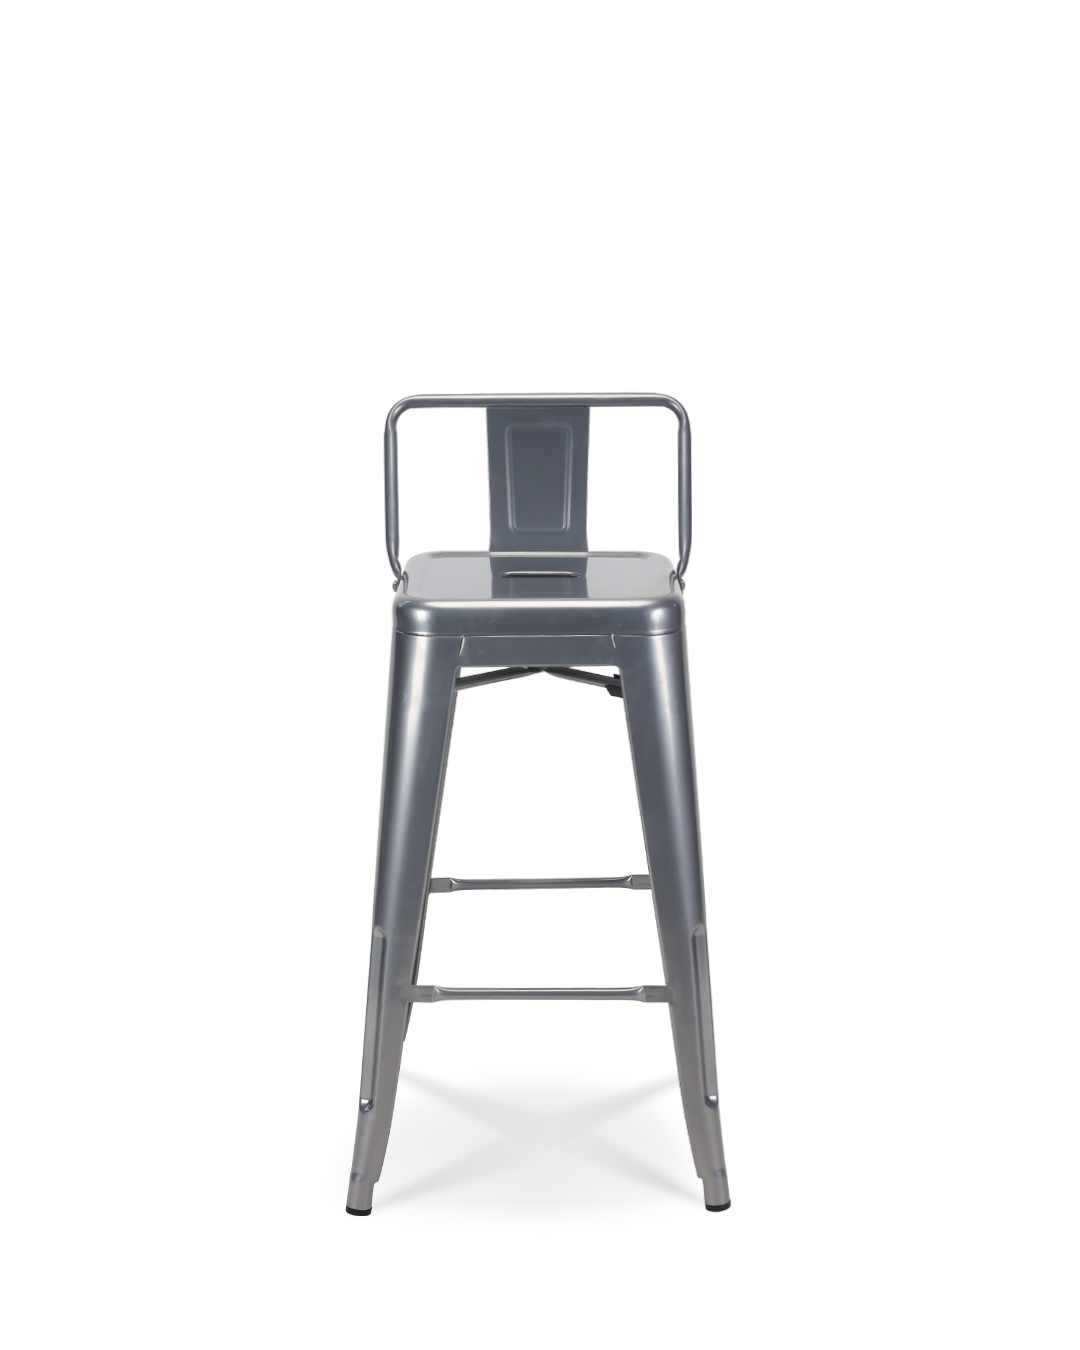 Lix Metal Counter Chair Original